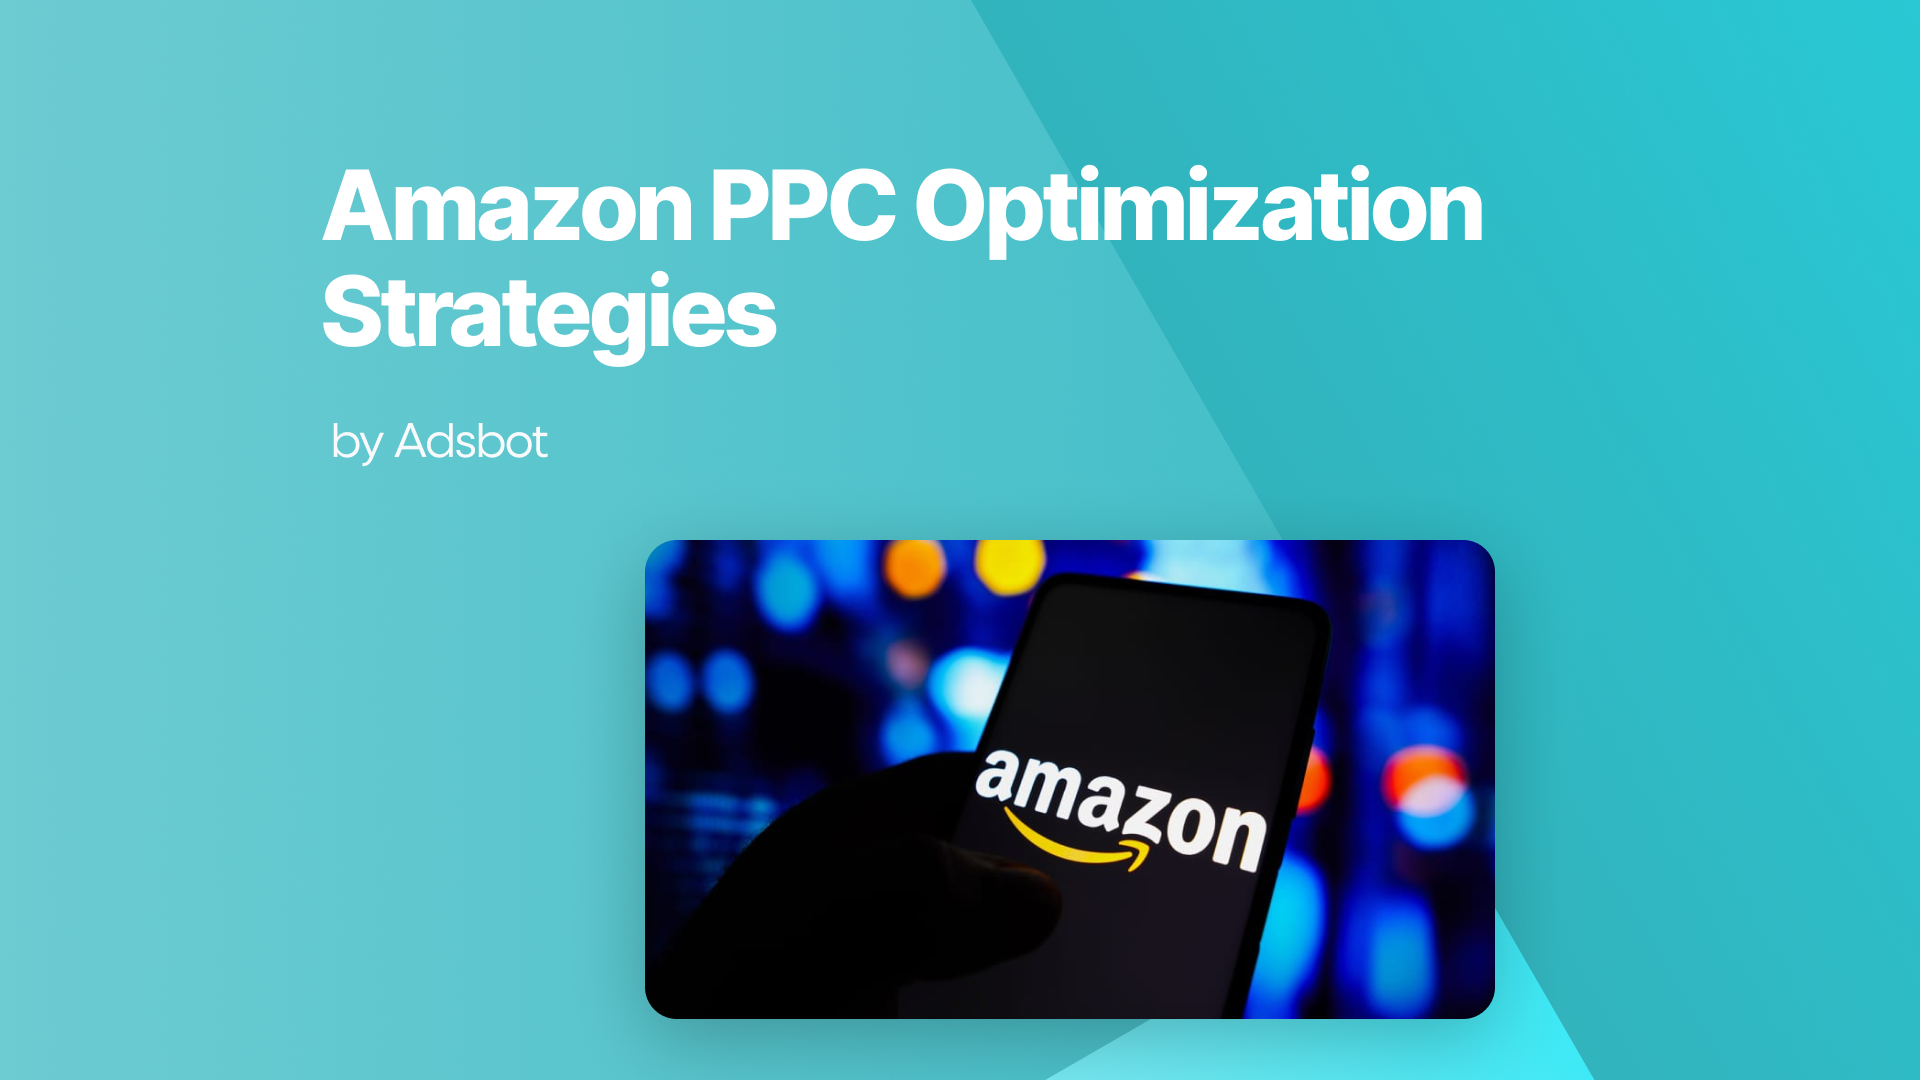 Amazon PPC Optimization Strategies